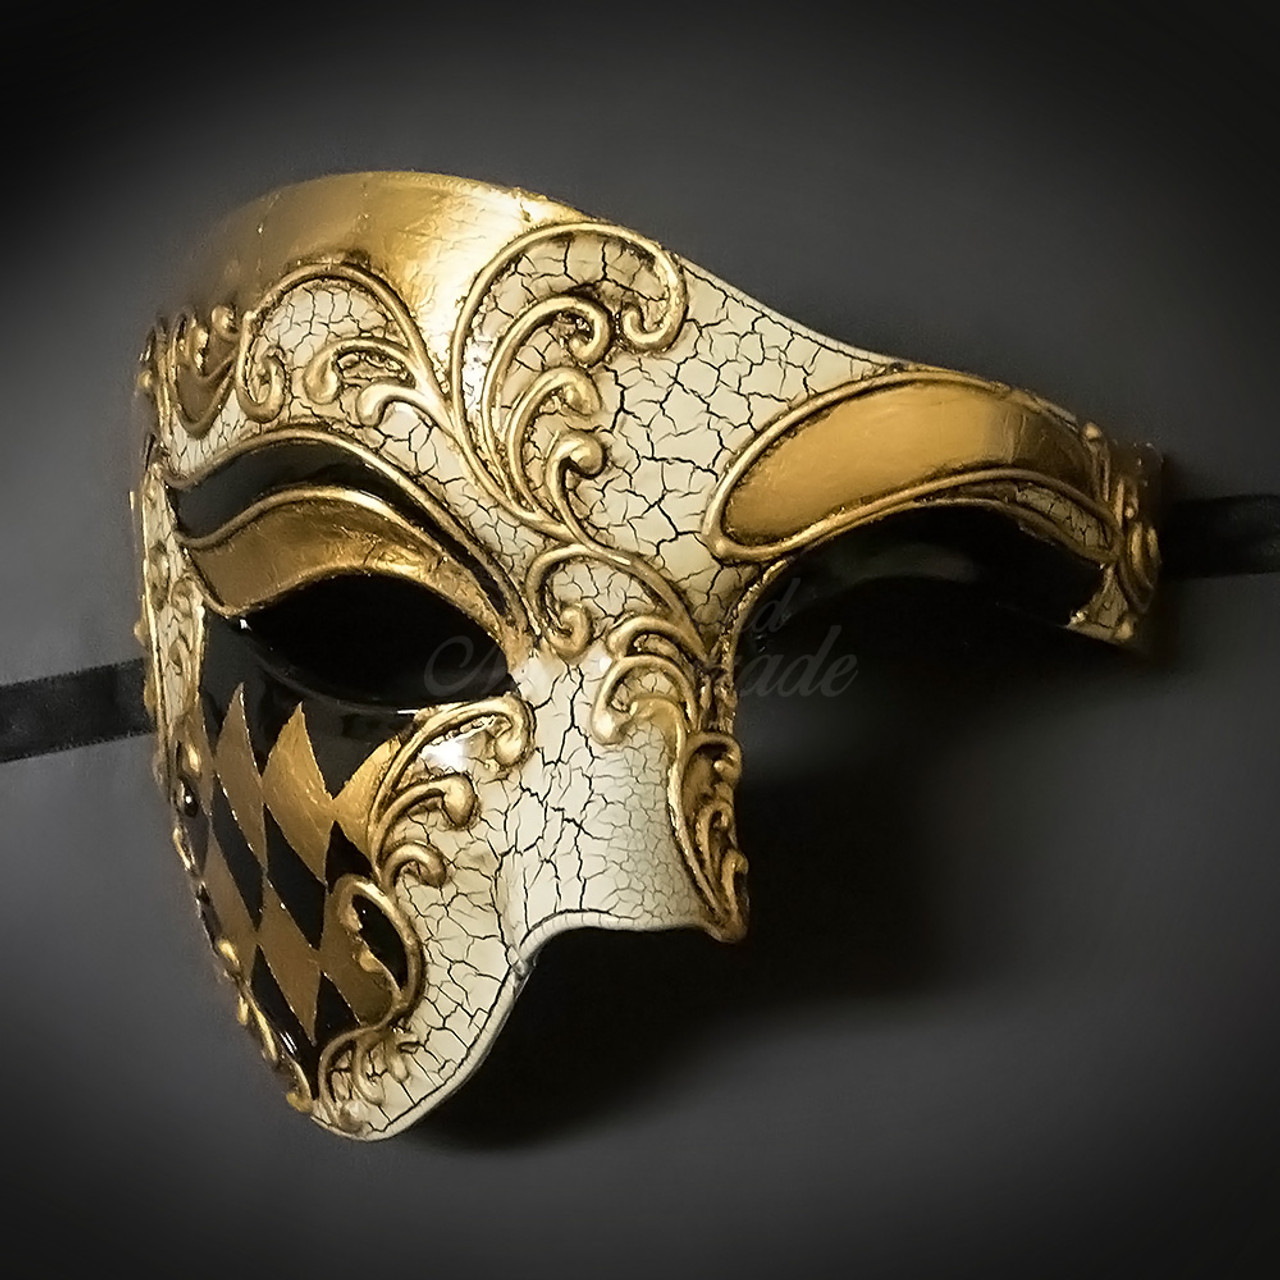 NEW Masquerade Ball Masks for Men Party Mask USA FREE SHIPPING